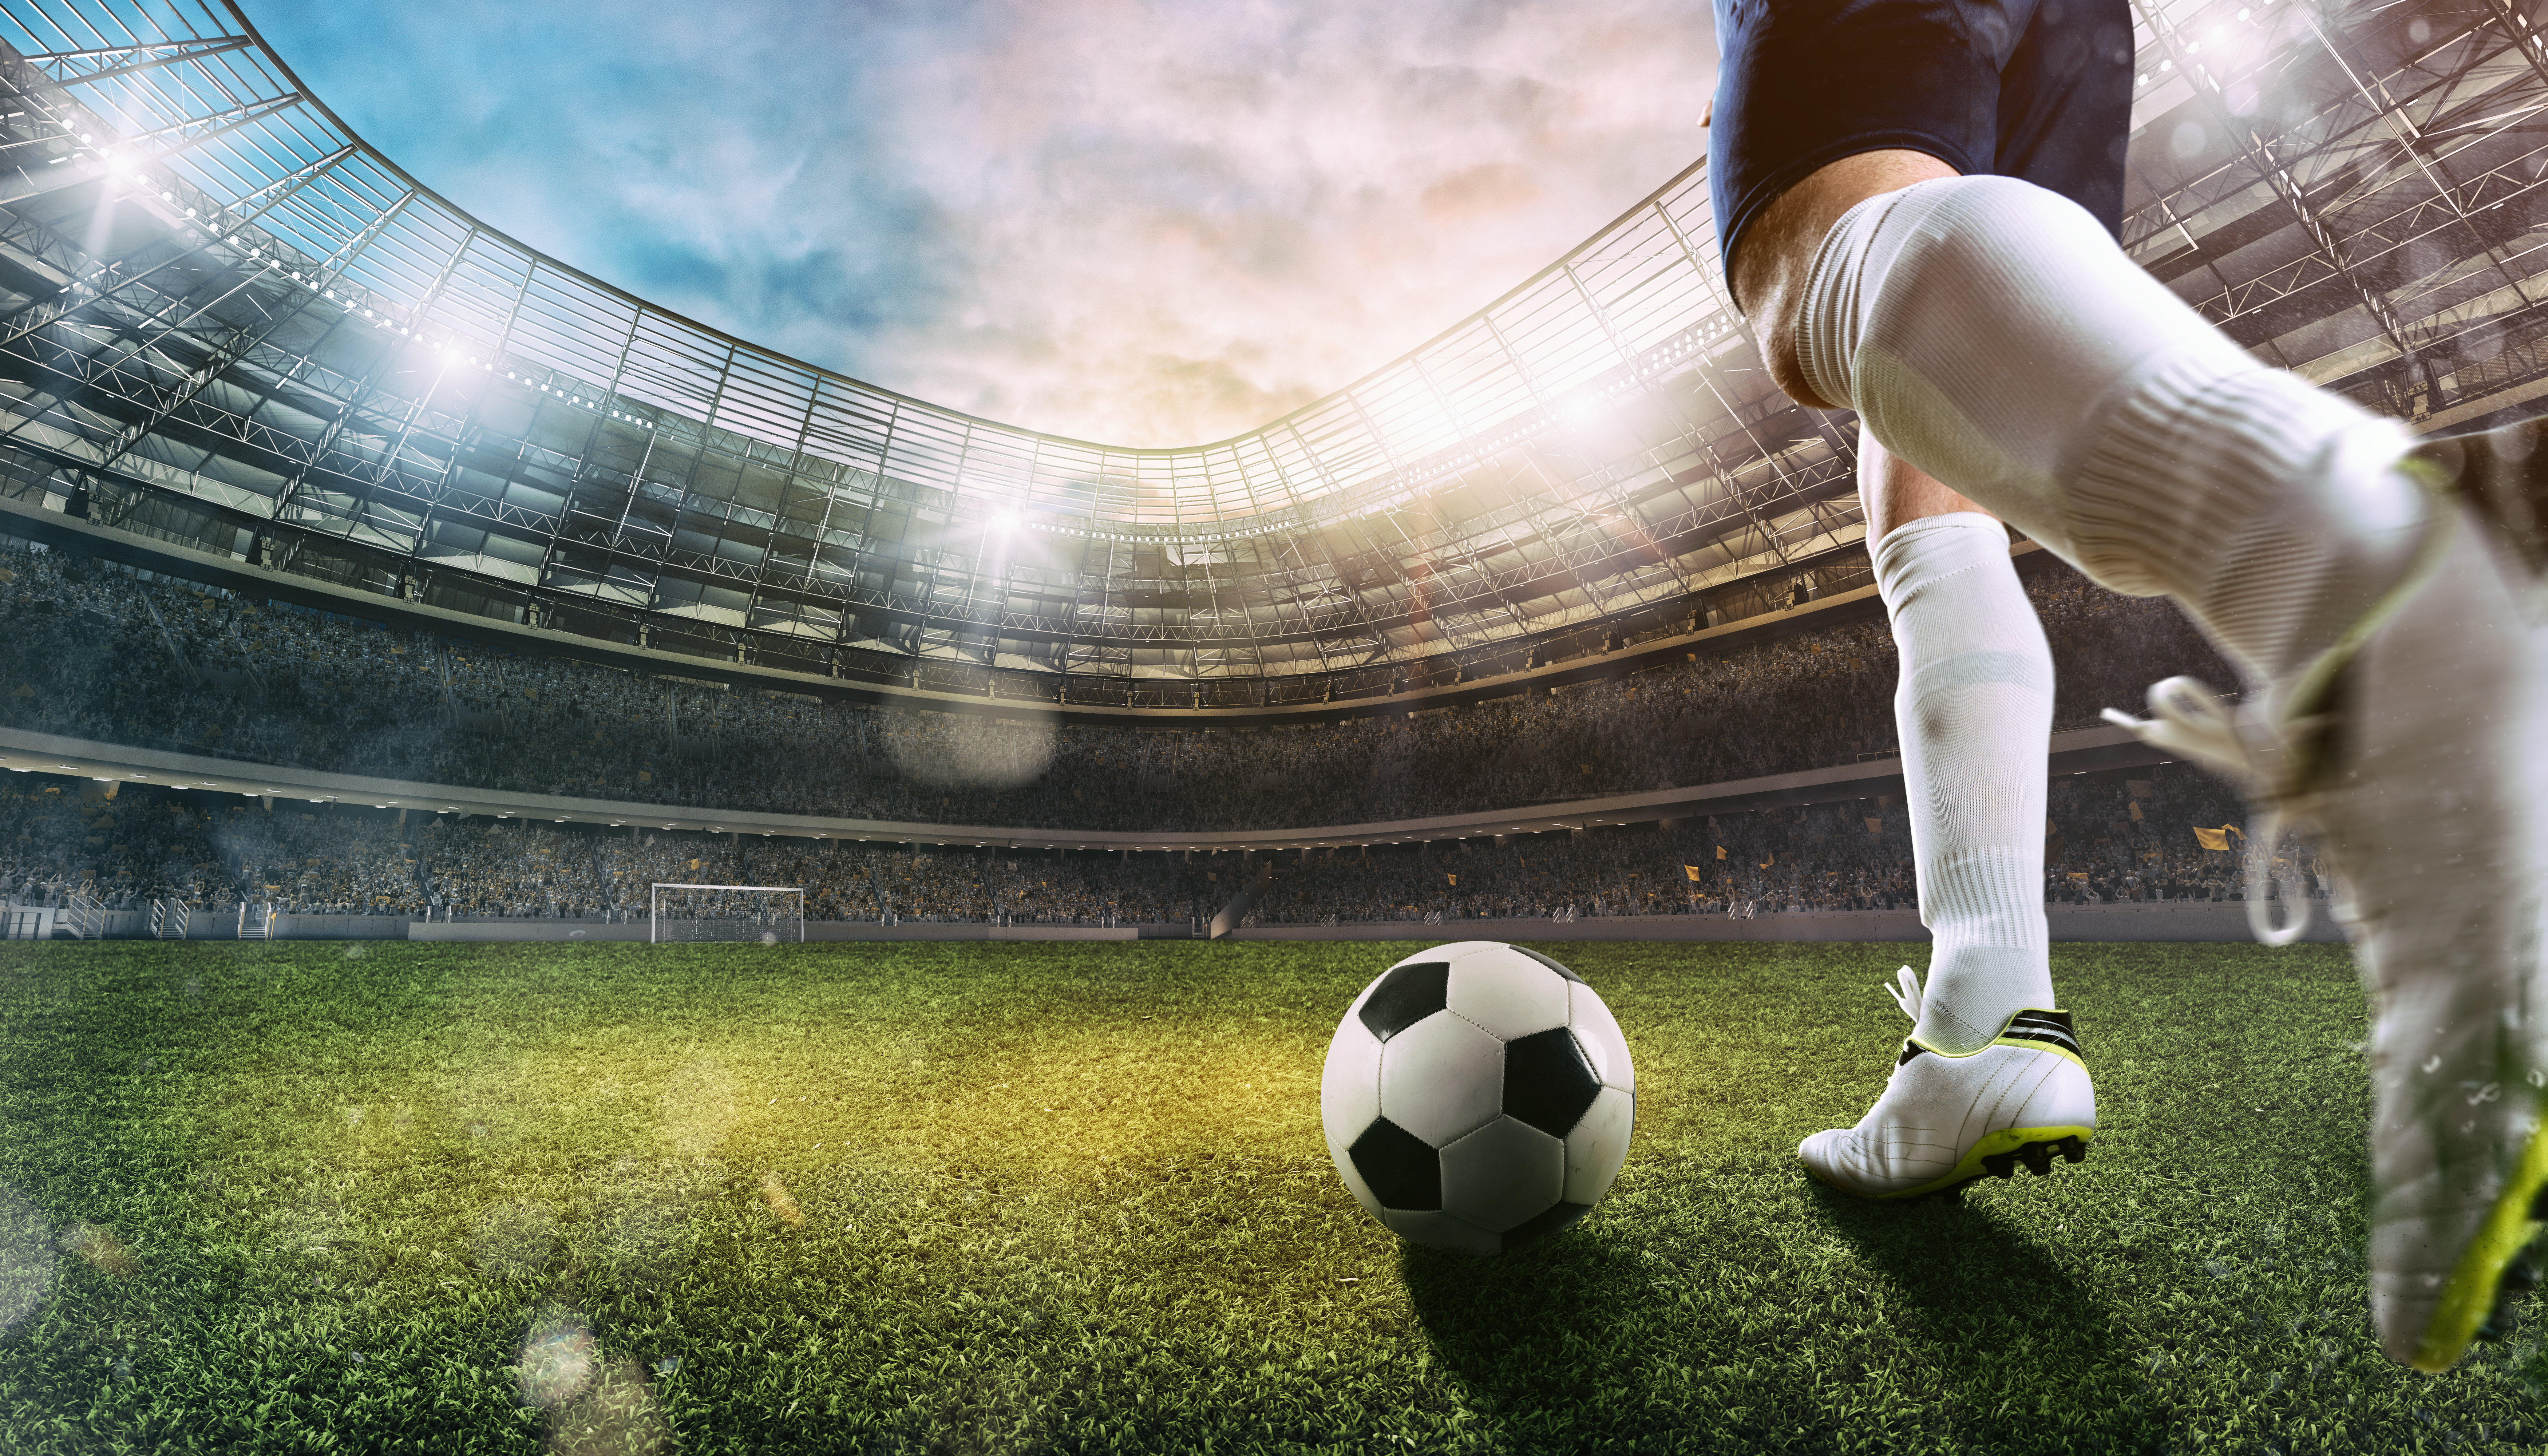 football-scene-stadium-with-close-up-soccer-shoe-kicking-ball-1.jpg (15.53 MB)